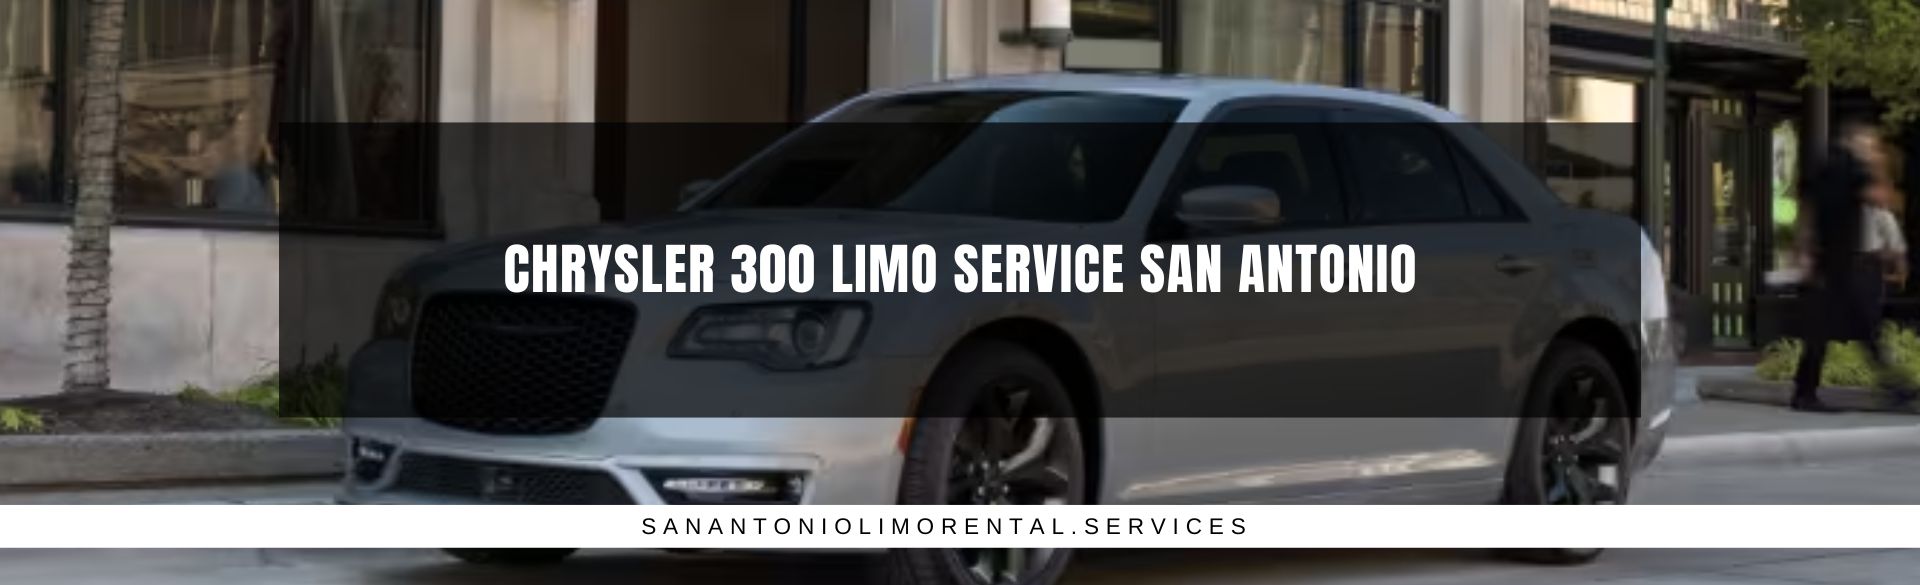 Chrysler 300 Limo Service San Antonio